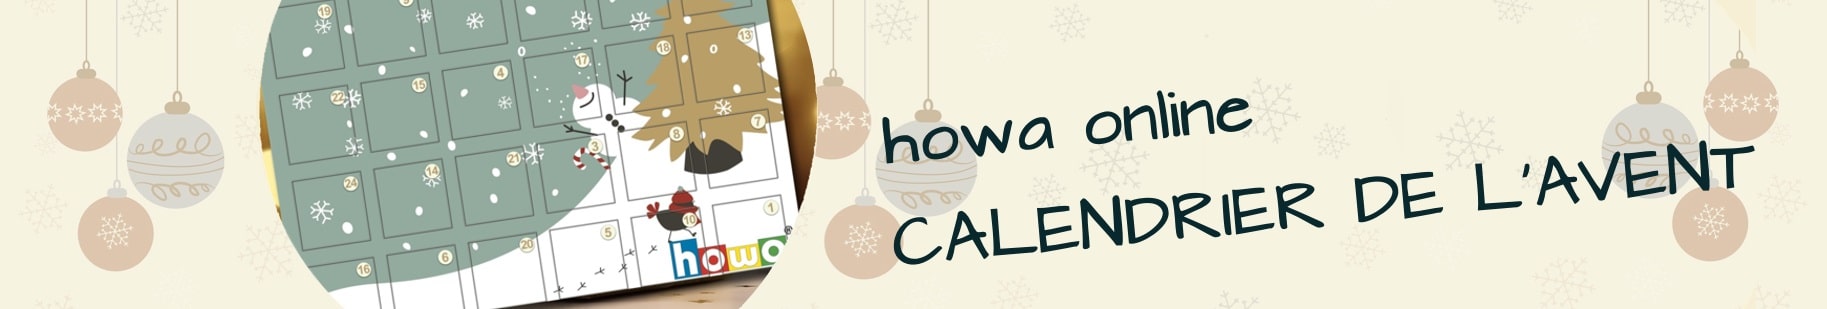 howa Online Calendrier de l'advent